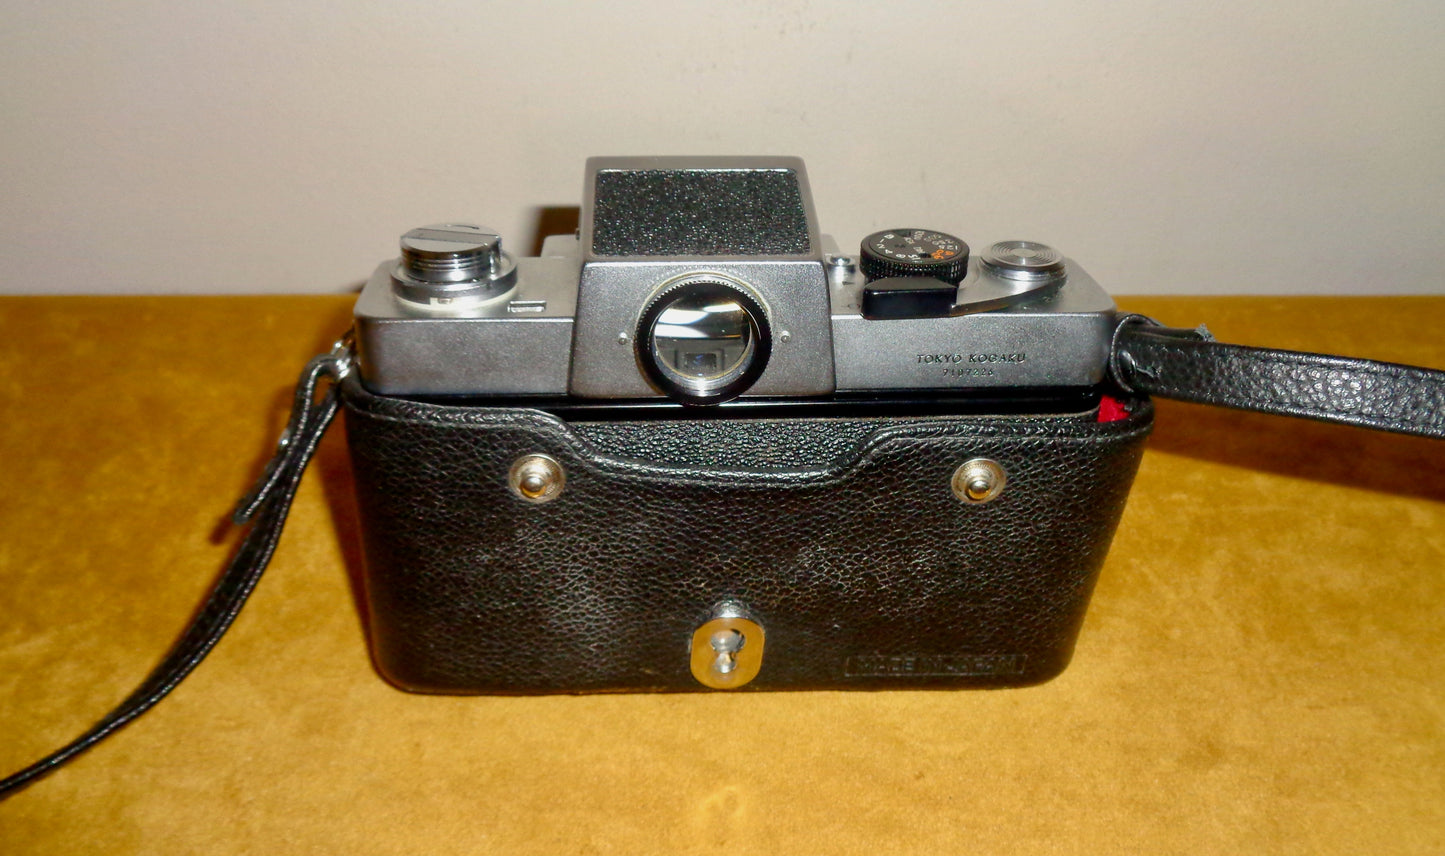 Topcon Super D 35mm Film Camera With f1.8 58mm Tokyo Kogaku RE. Auto Topcor Lens